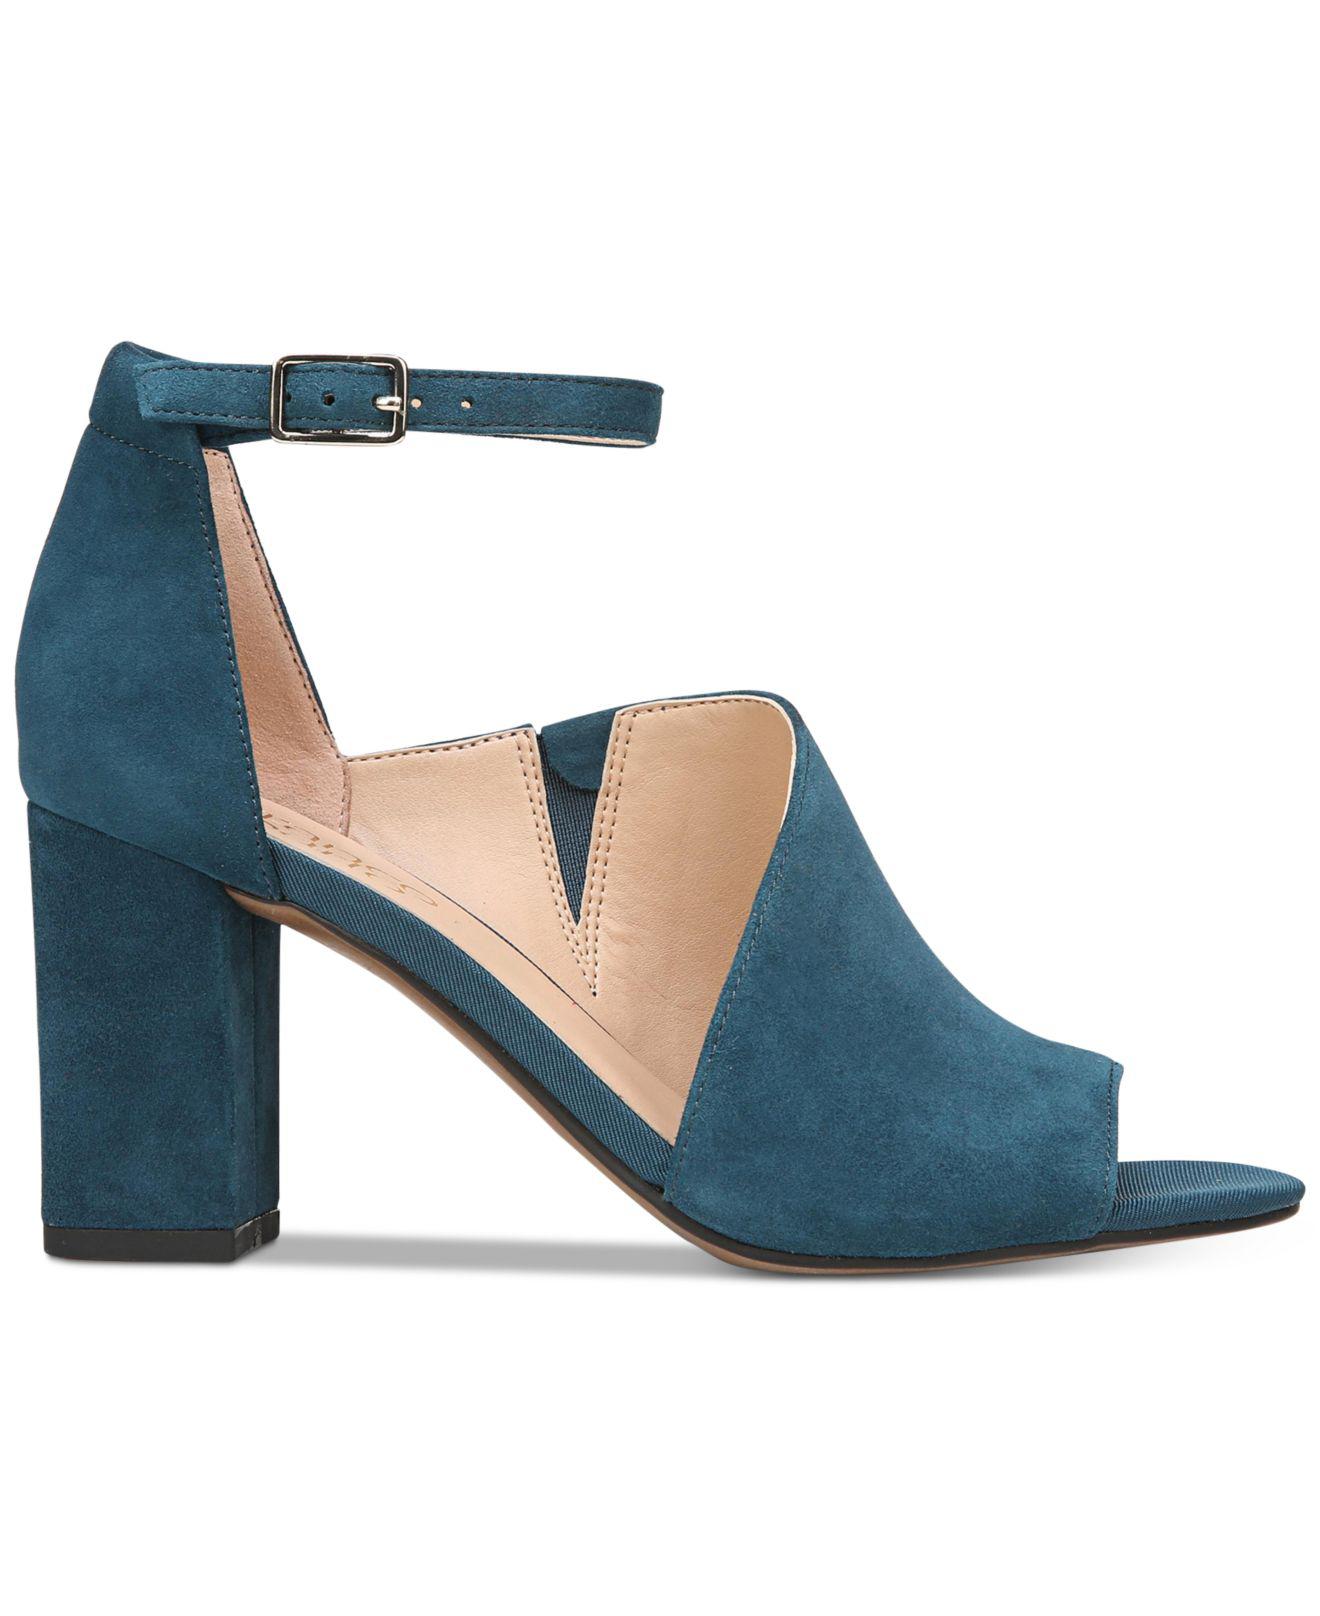 Franco Sarto Suede Gayle Block-heel Dress Sandals in Blue - Lyst